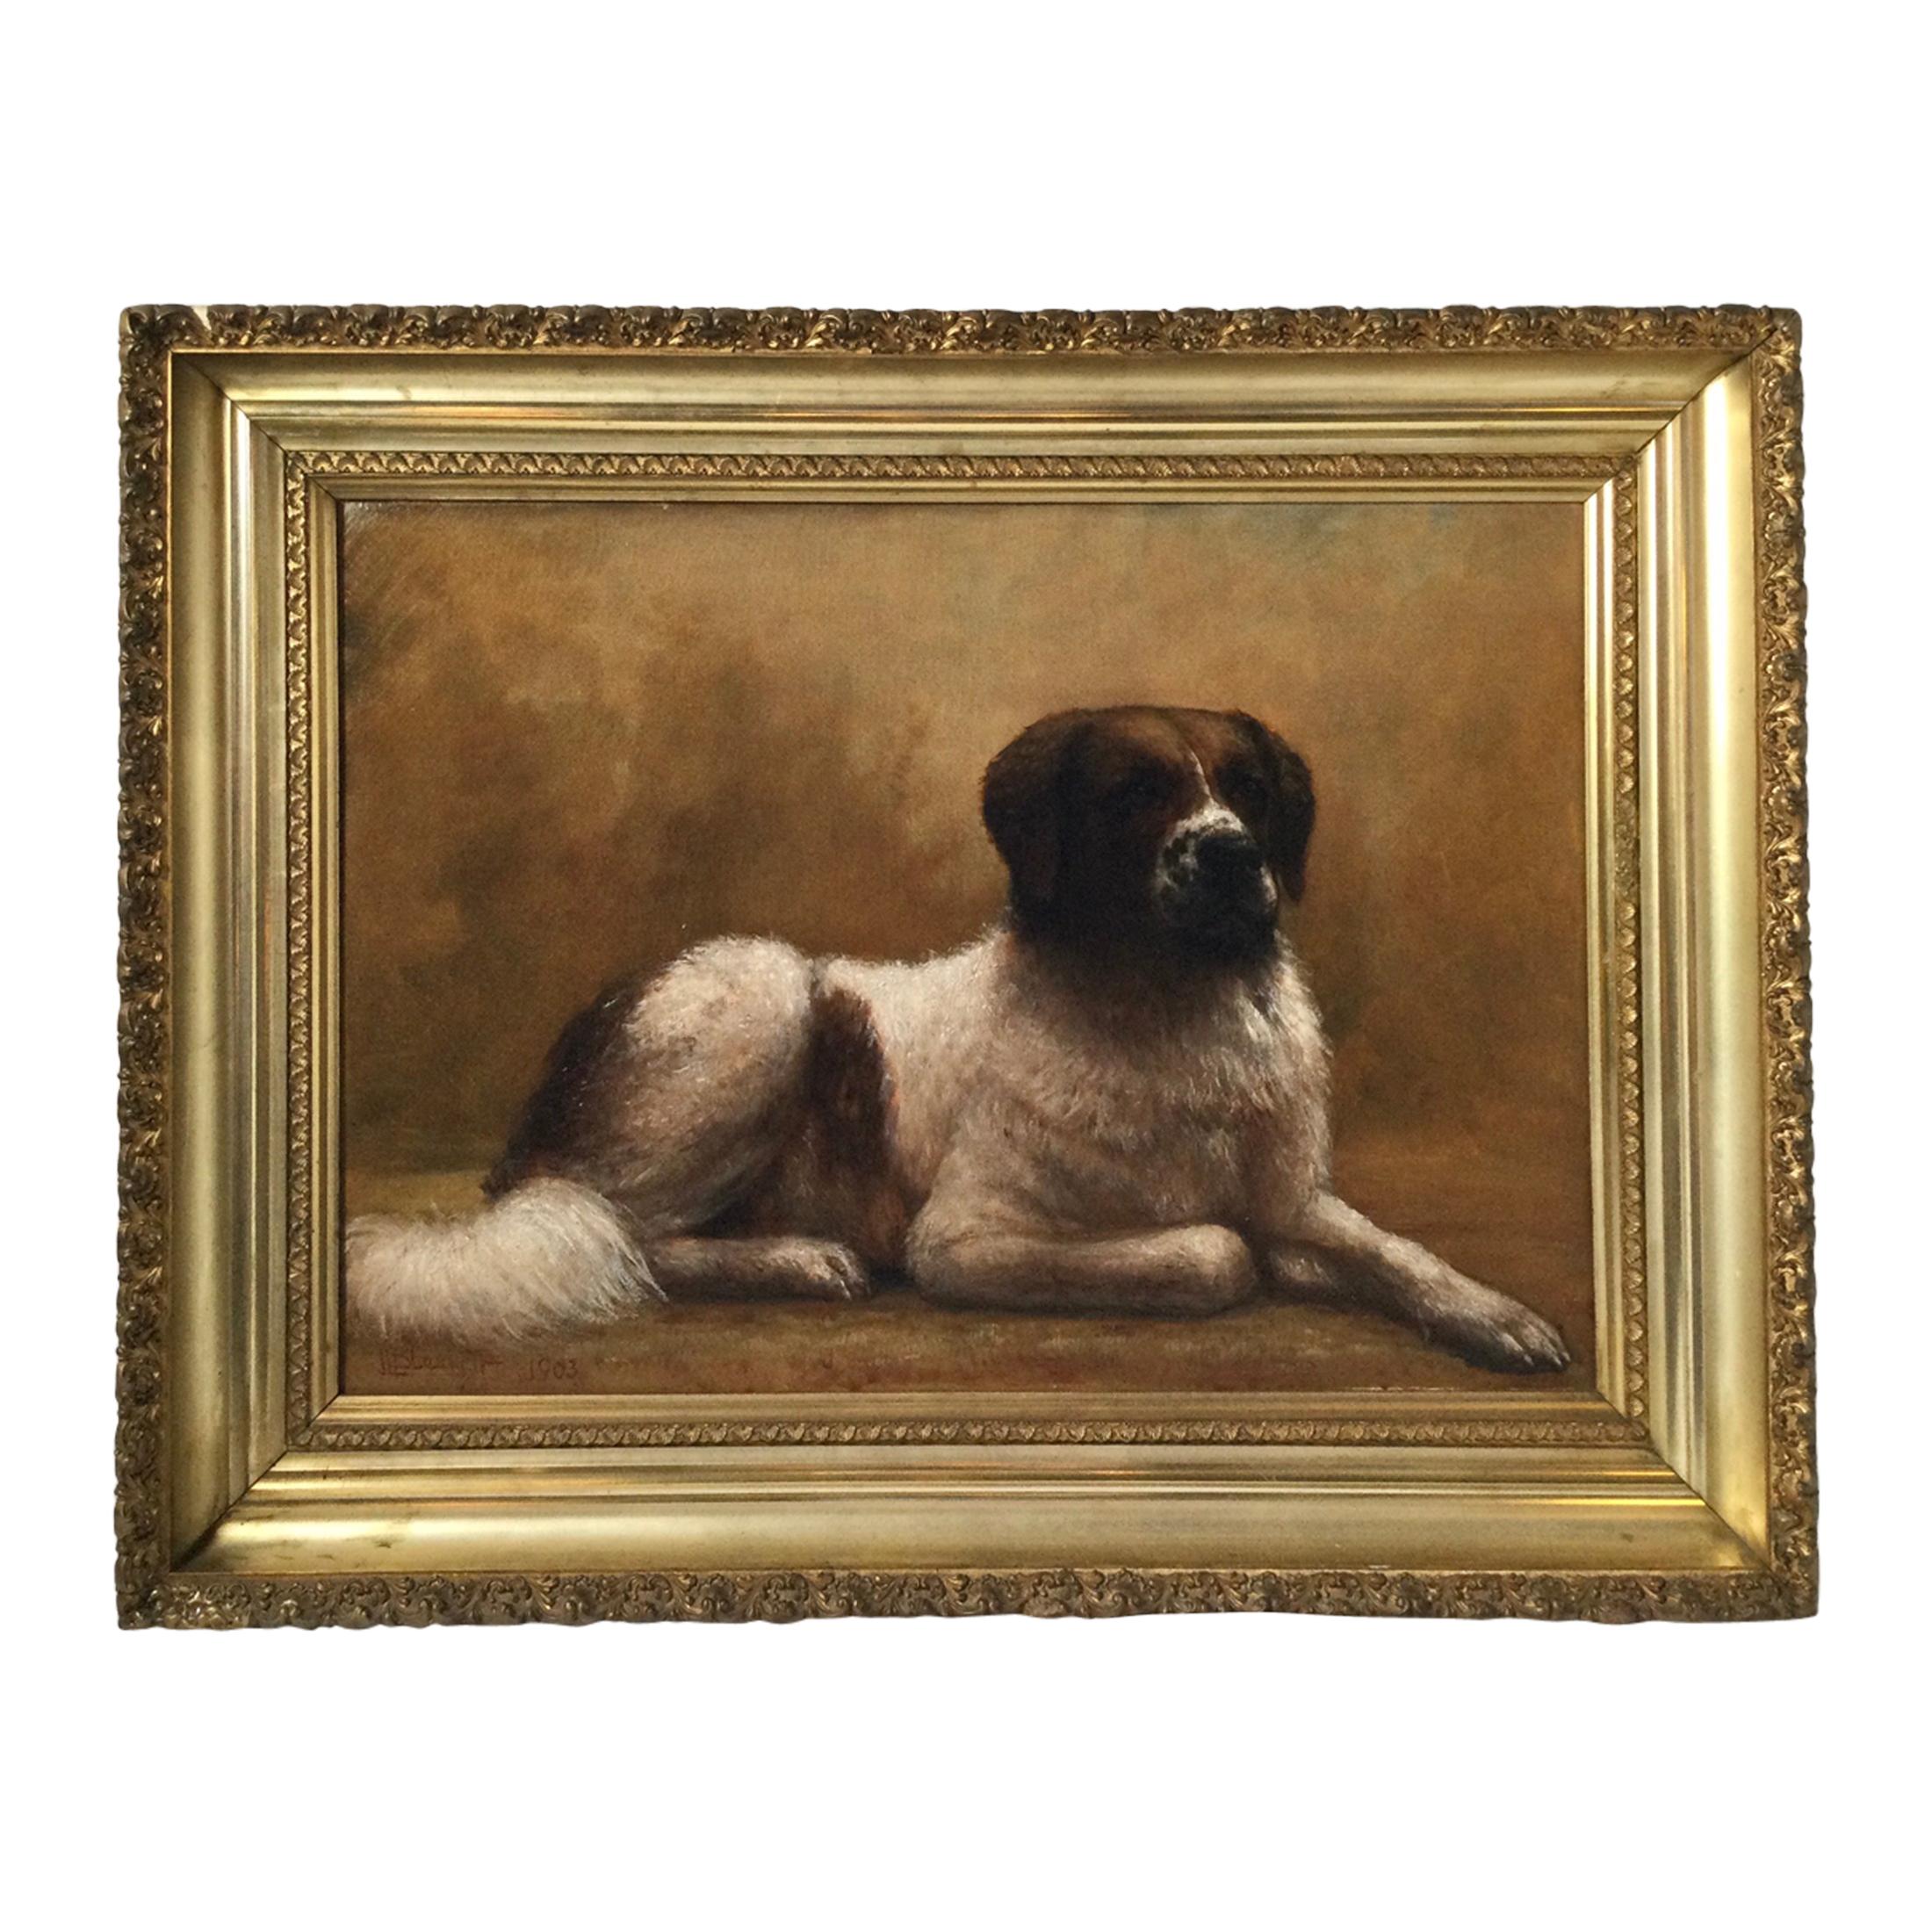 Artist Signed Oil on Canvas of a Saint Bernard Dog, Dated 1903